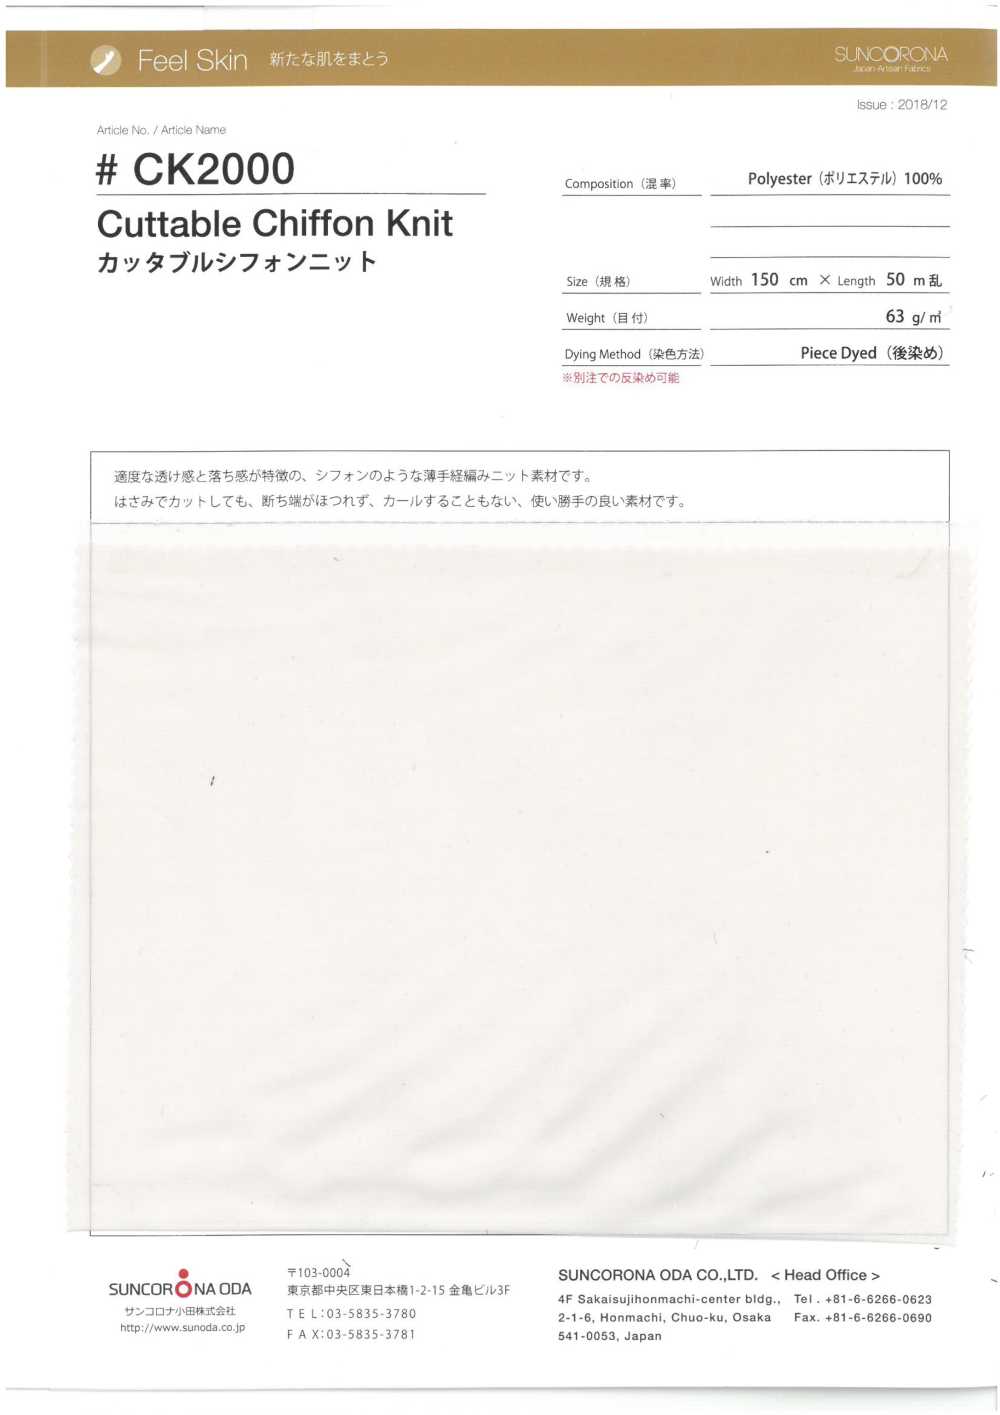 CK2000 Maglia In Chiffon Tagliabile[Tessile / Tessuto] Suncorona Oda